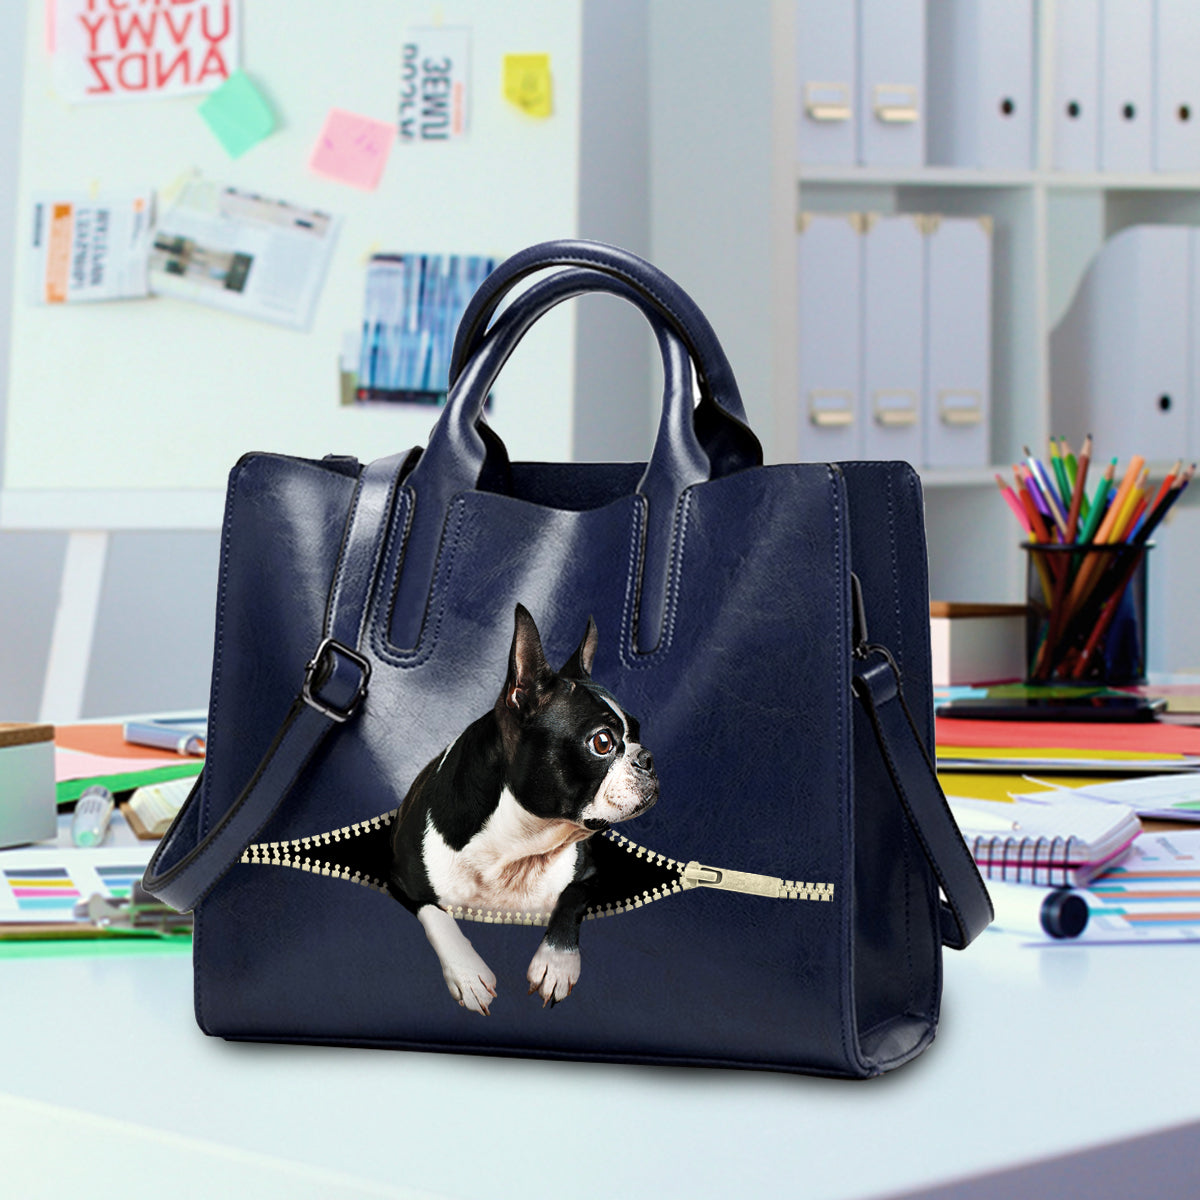 Reduce Stress At Work With Boston Terrier - Luxury Handbag V1